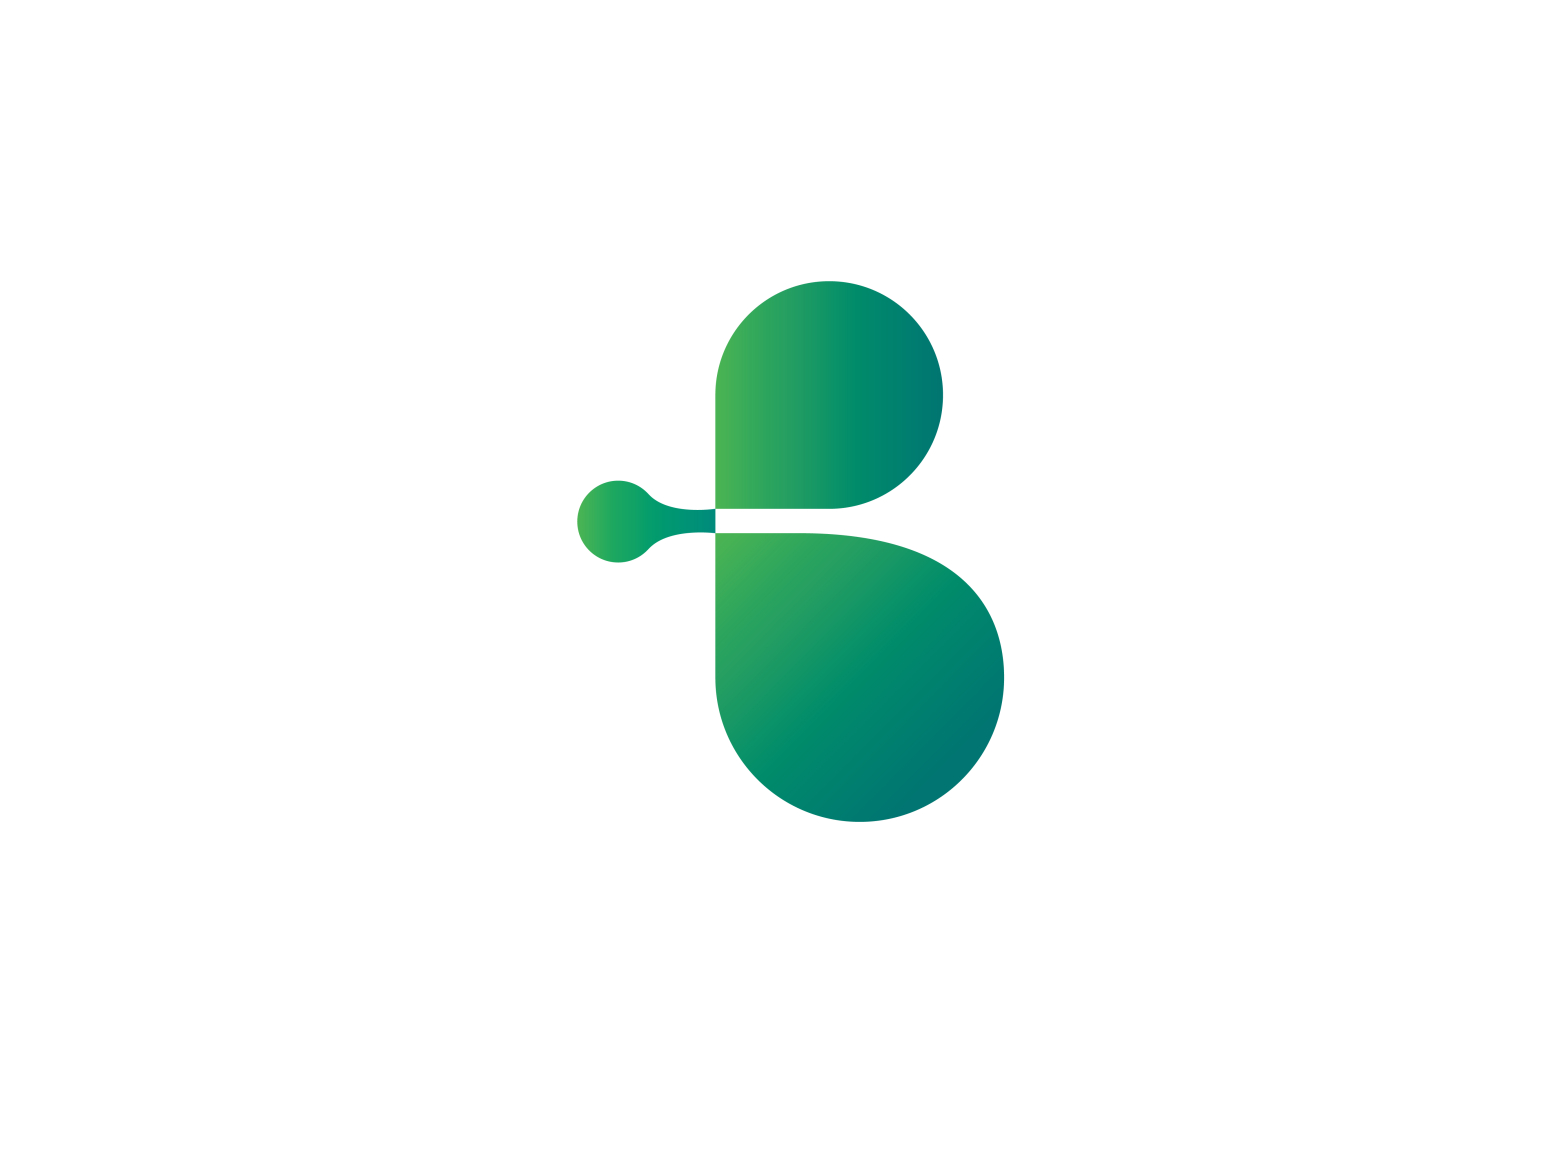 B logo by chuanqi jin on Dribbble